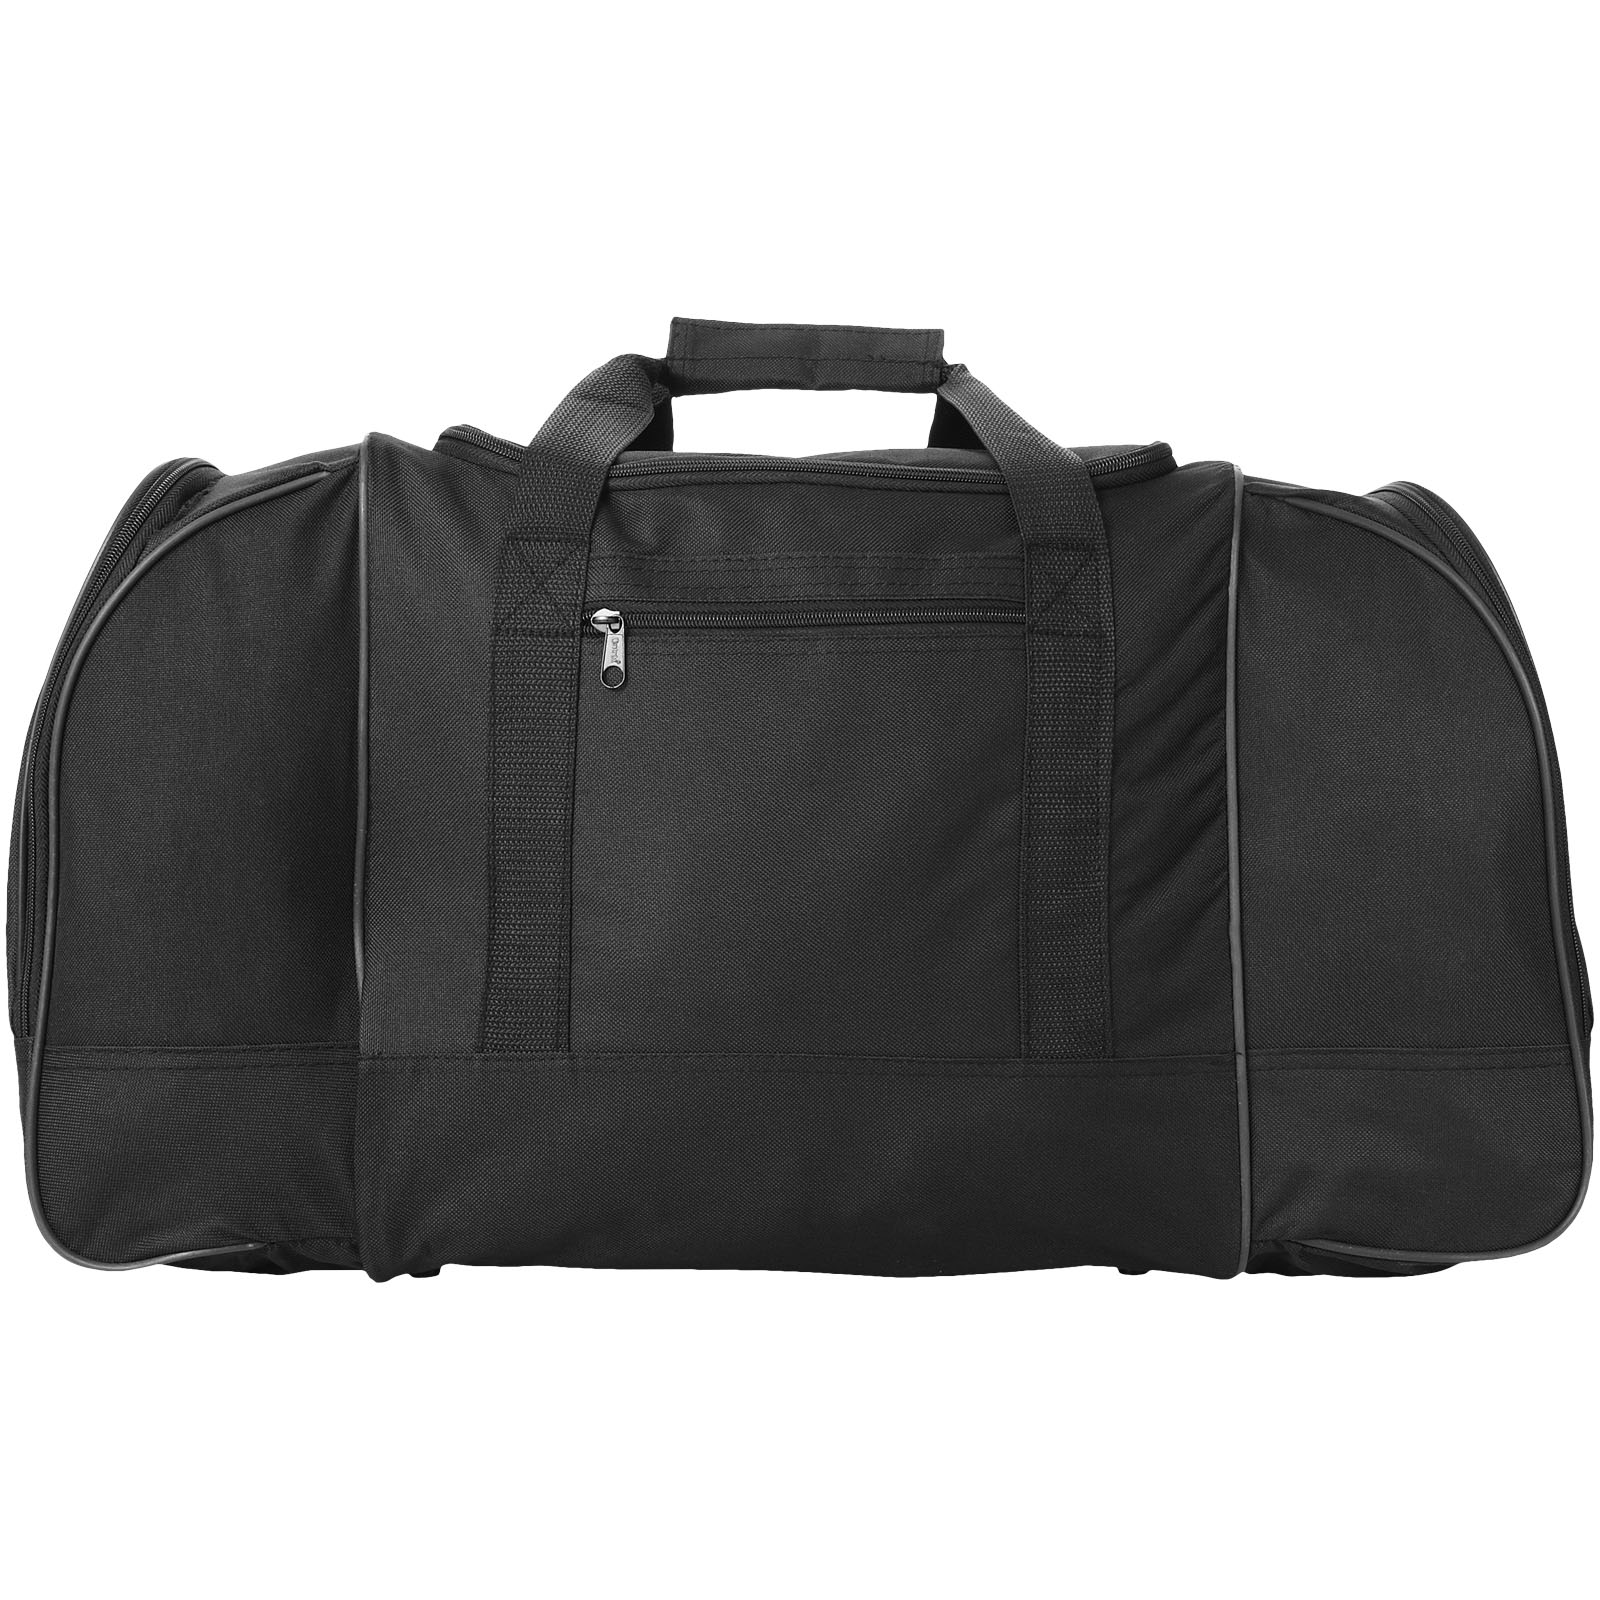 Advertising Travel bags - Nevada travel duffel bag 30L - 1